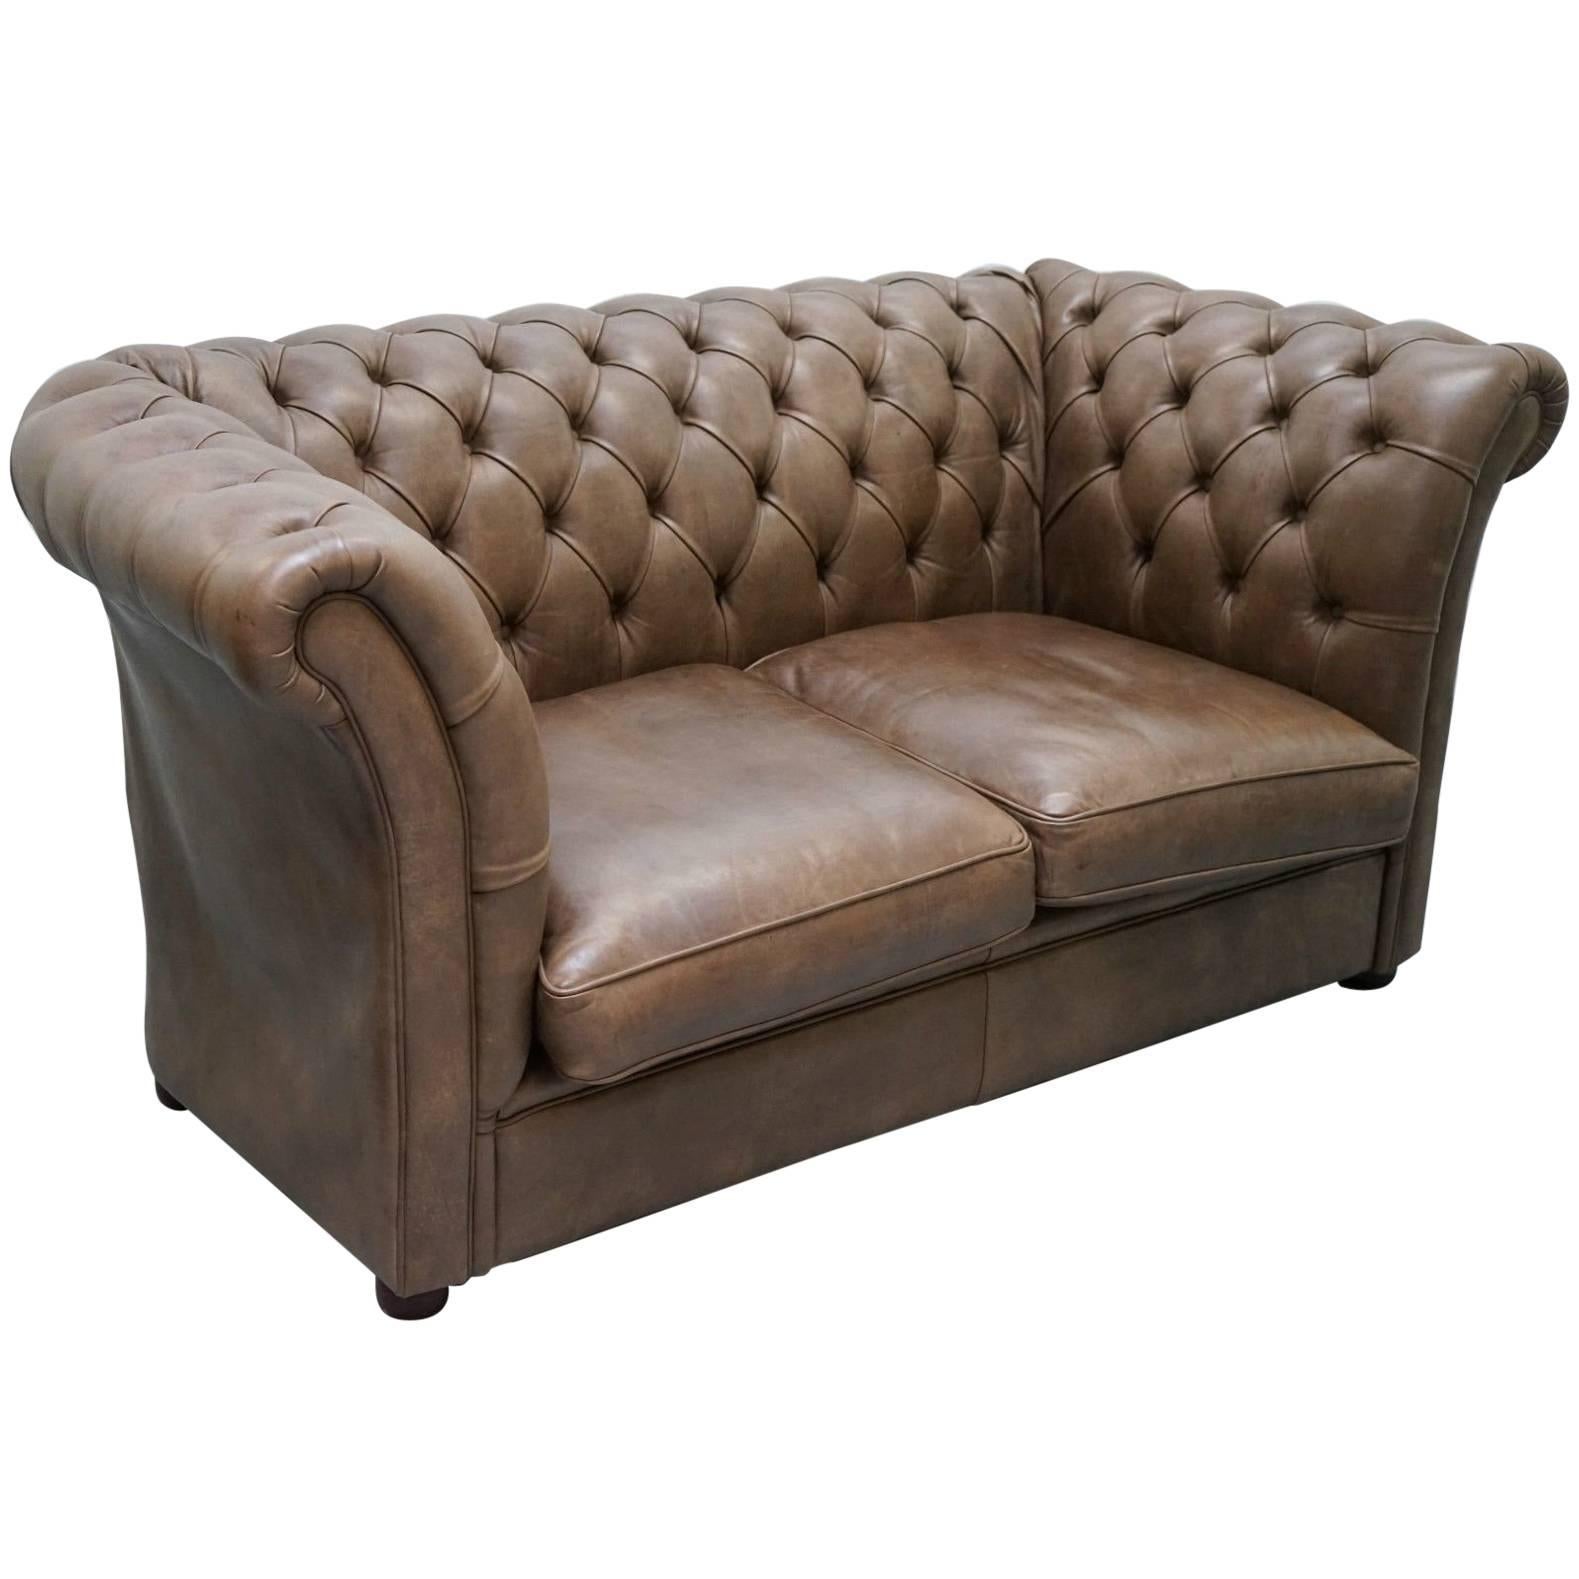 Rare Handmade Chesterfield Very Tall Club Sofa Luxury Leather